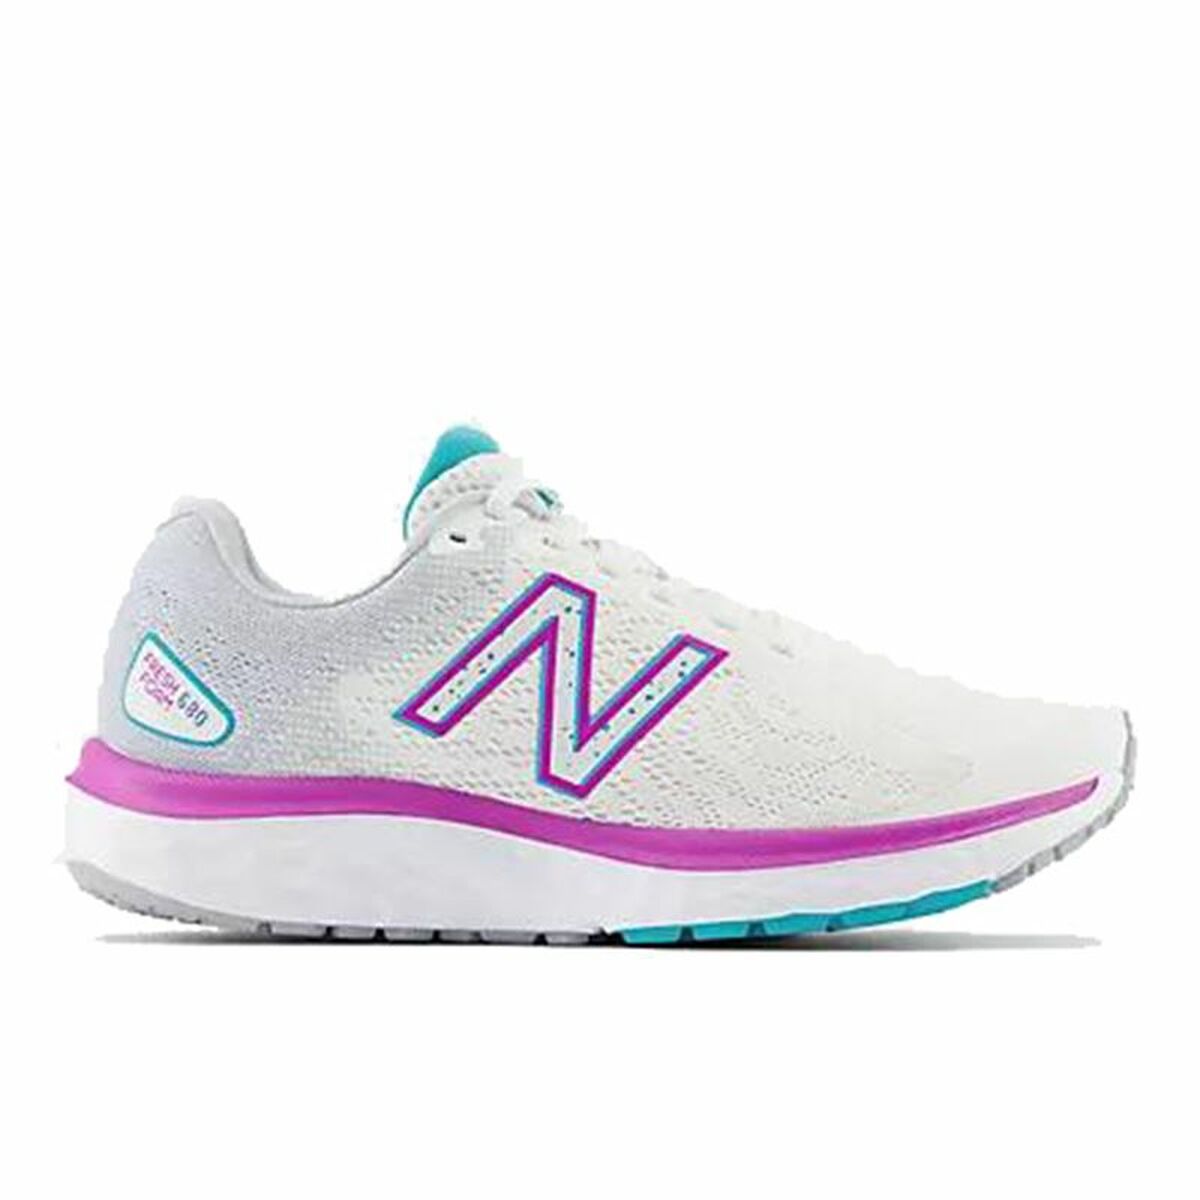 Chaussures de Running pour Adultes New Balance Fresh Foam 680v7 Femme Blanc